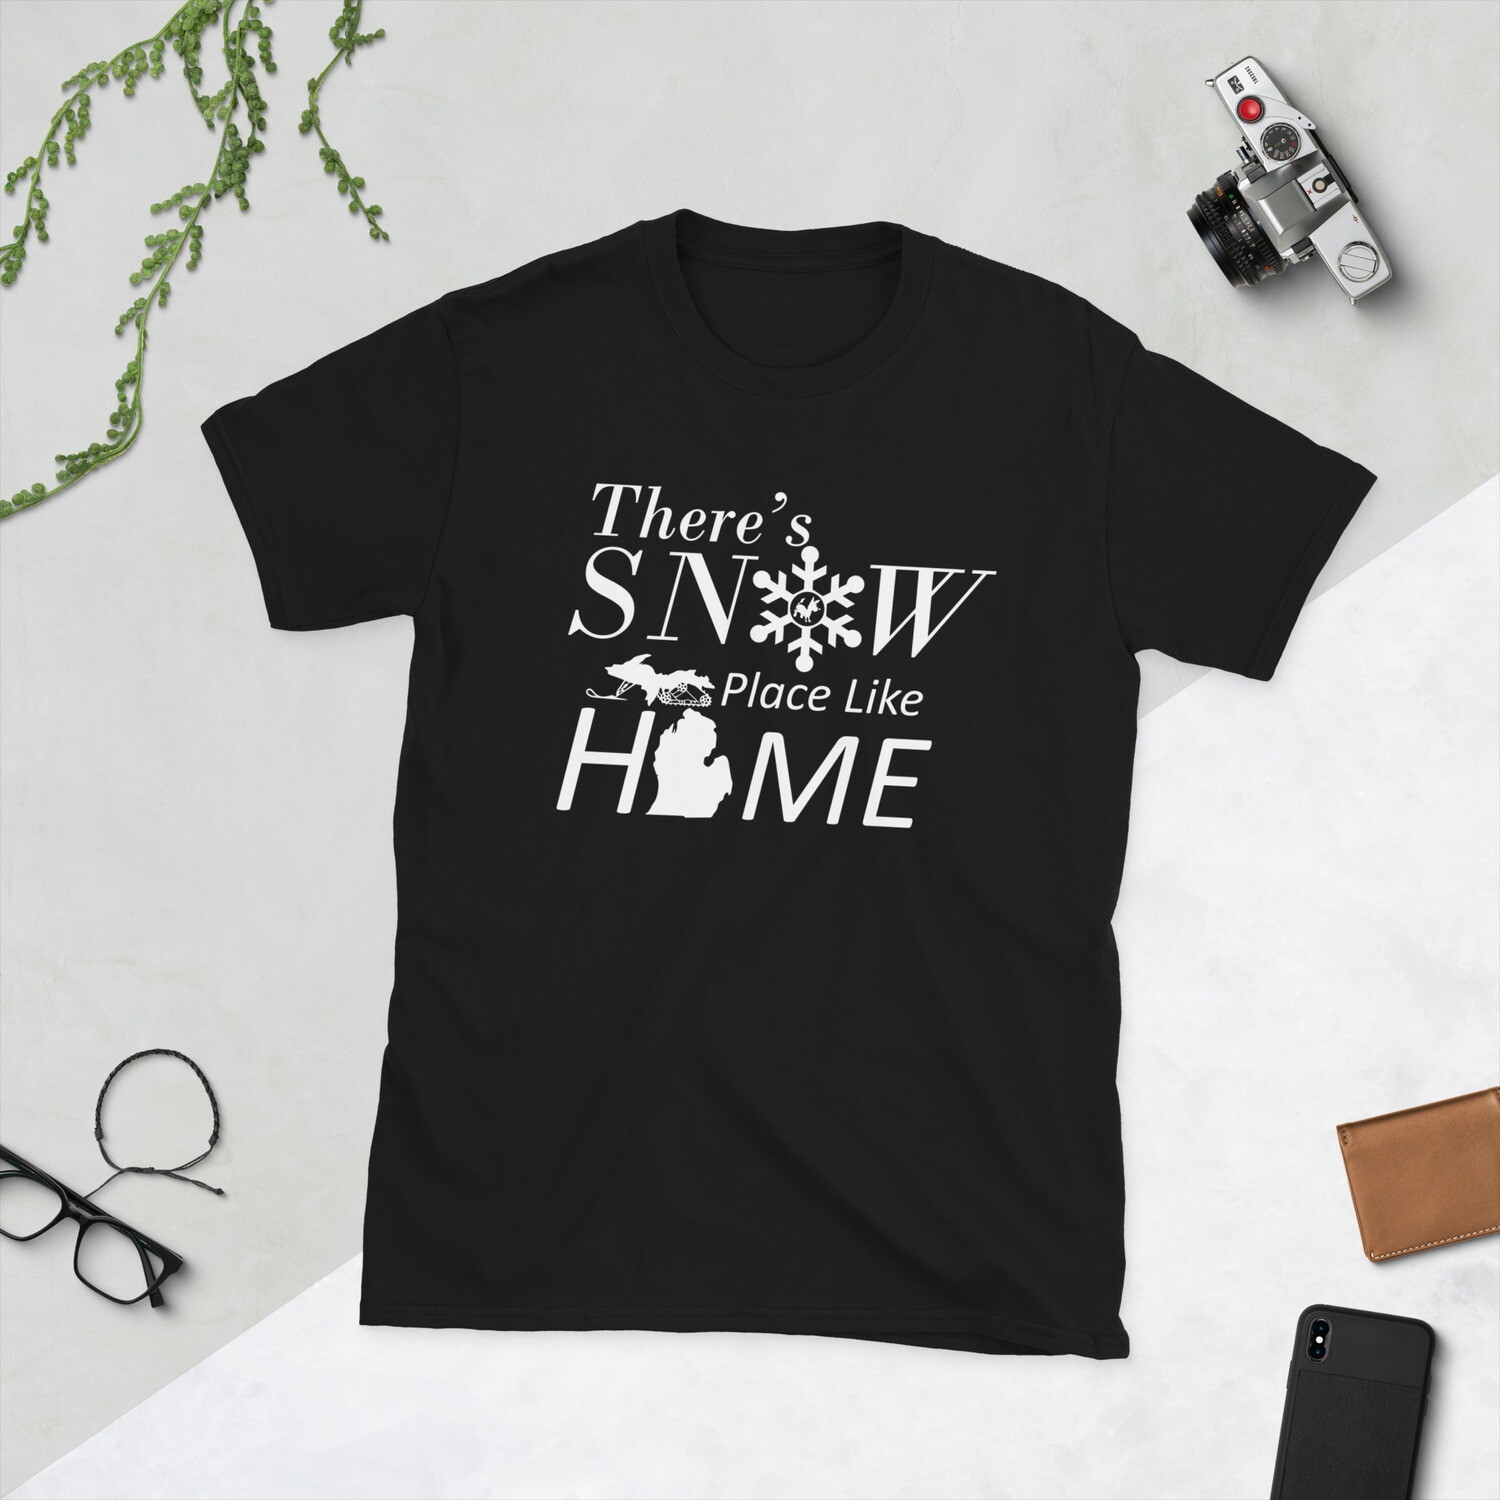 Snow Place Like Home Short-Sleeve Unisex T-Shirt